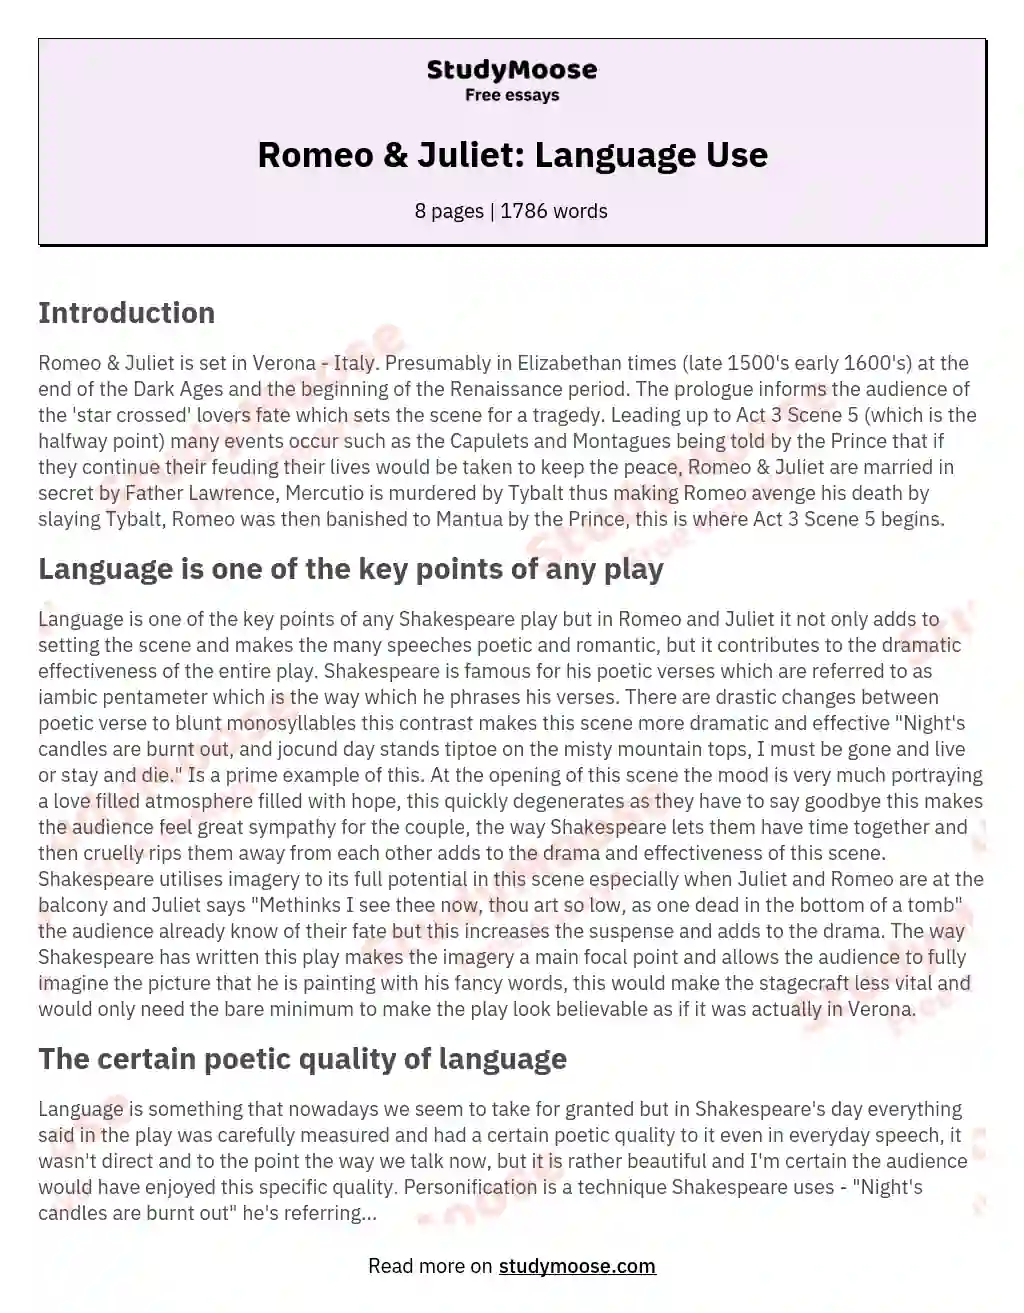 Romeo & Juliet: Language Use essay